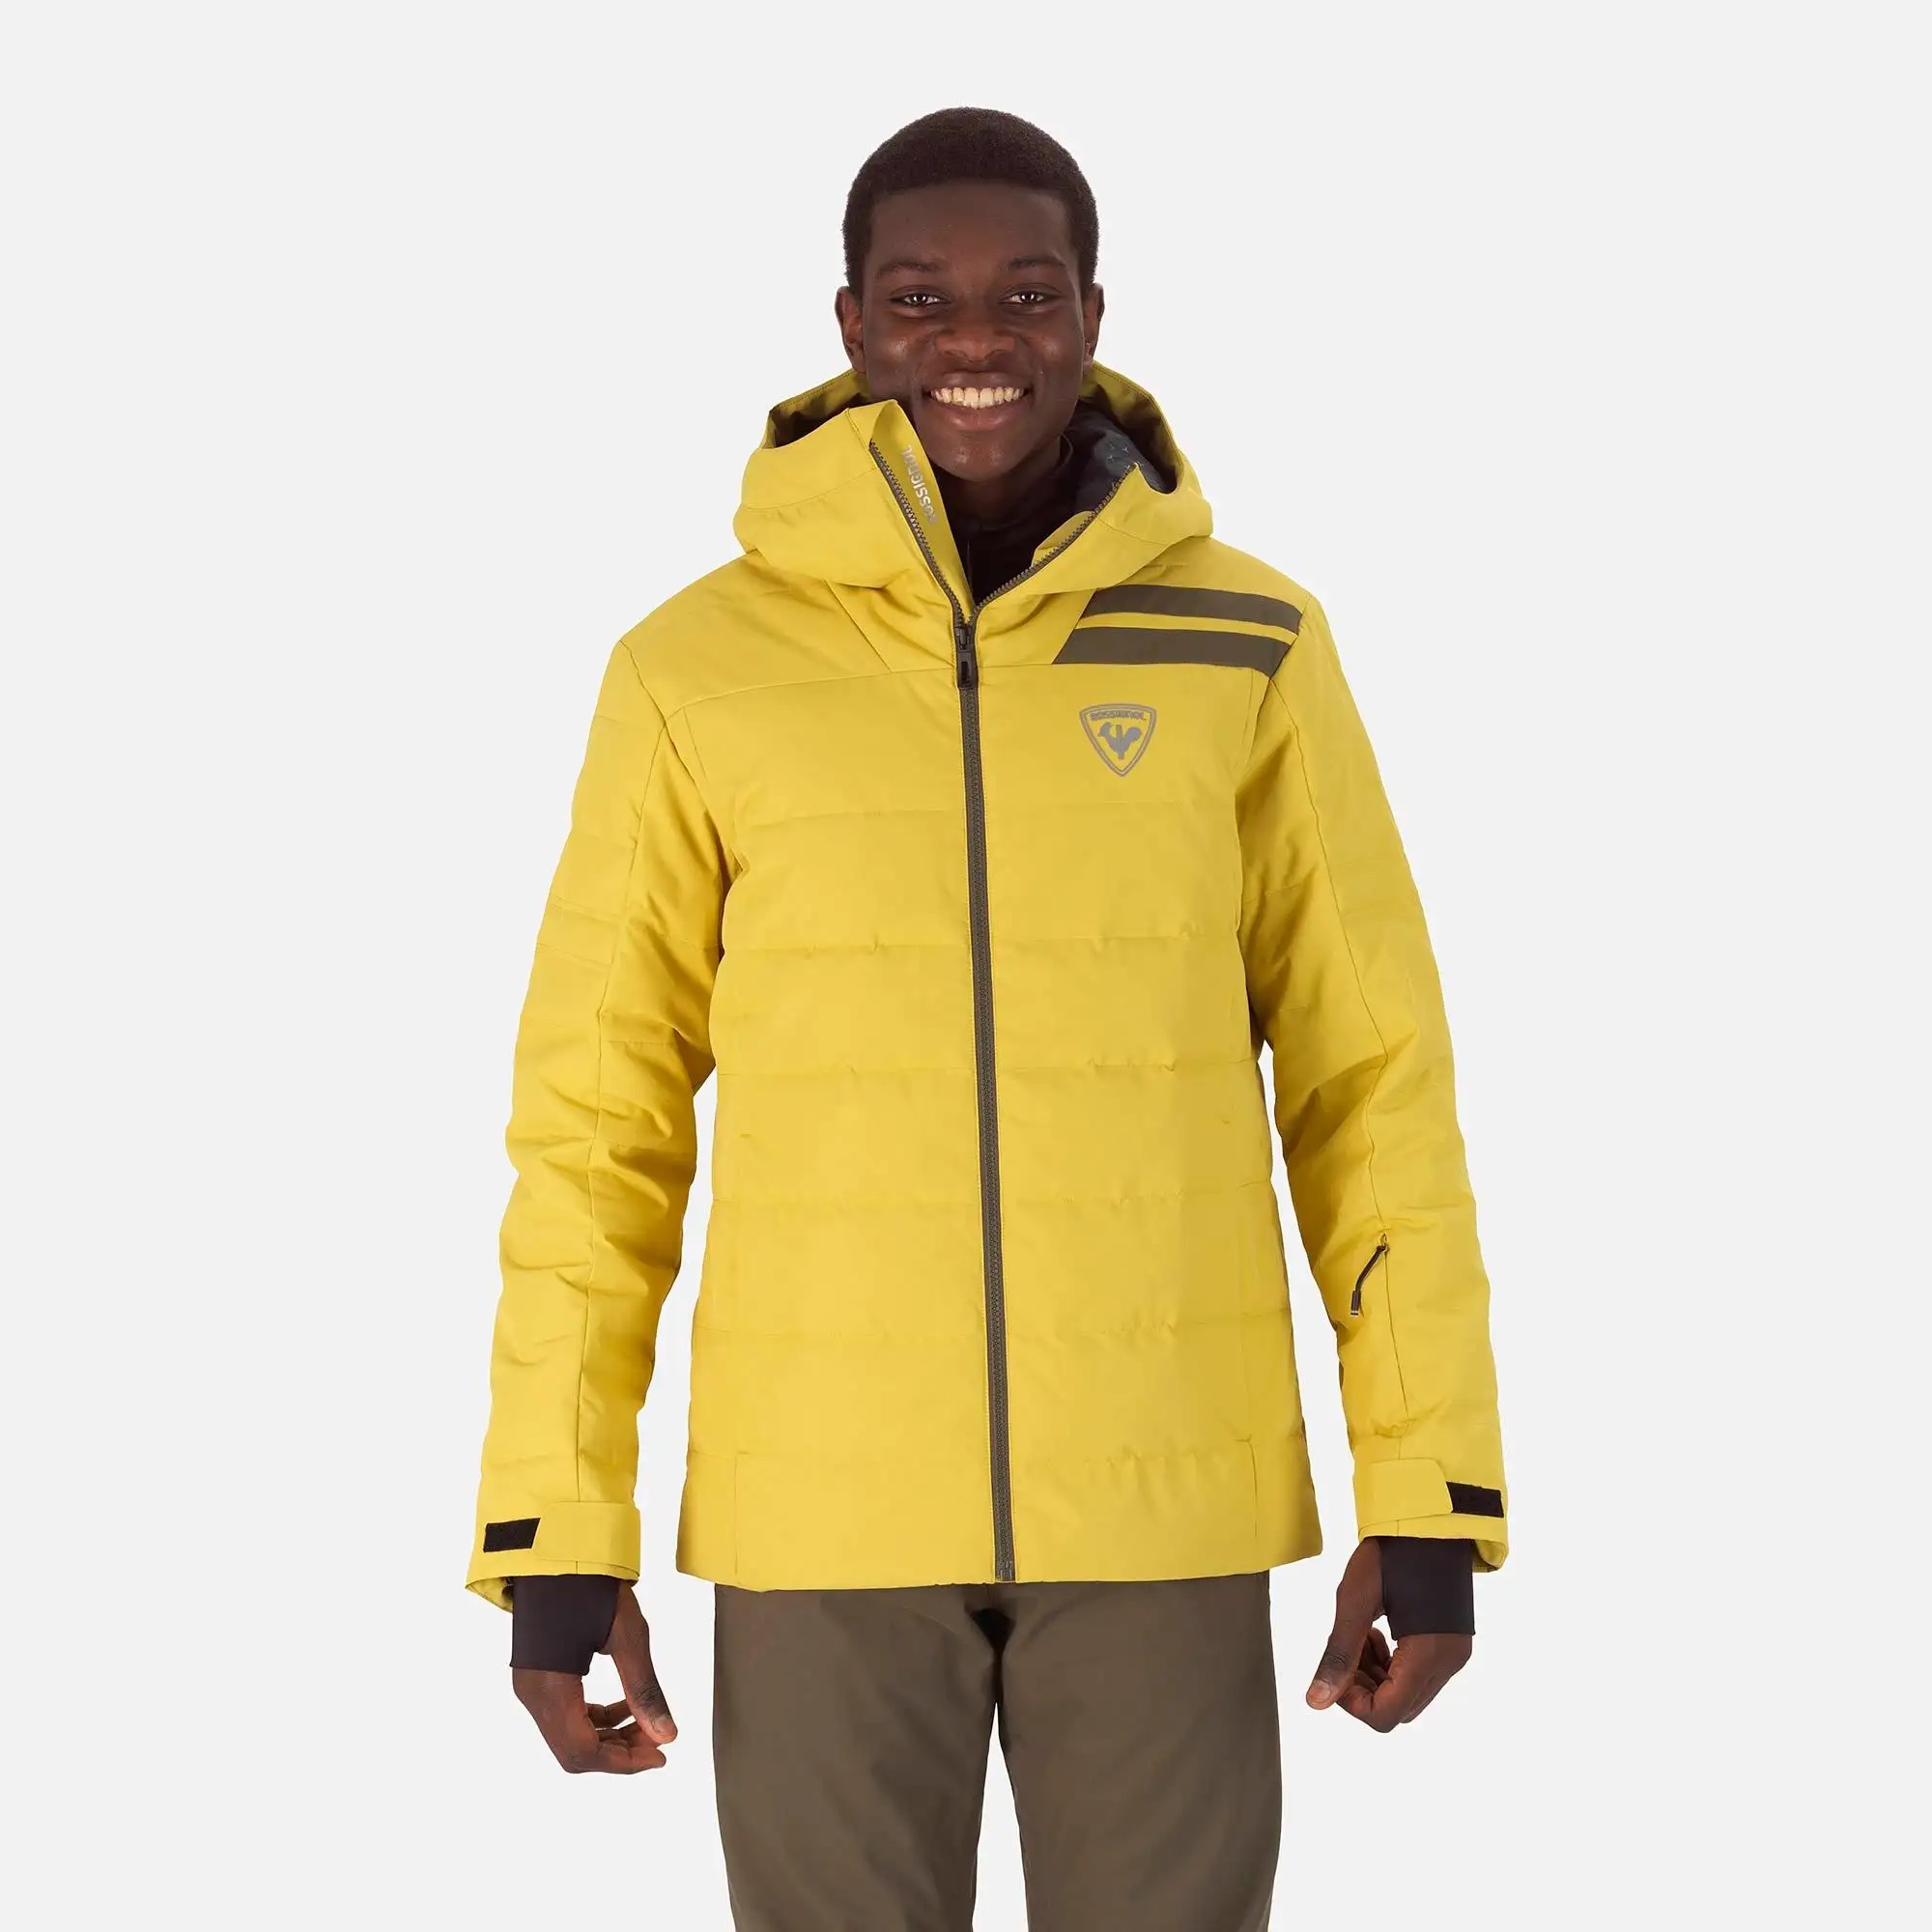 ROSSIGNOL Rapide Ski Jacket, yellow